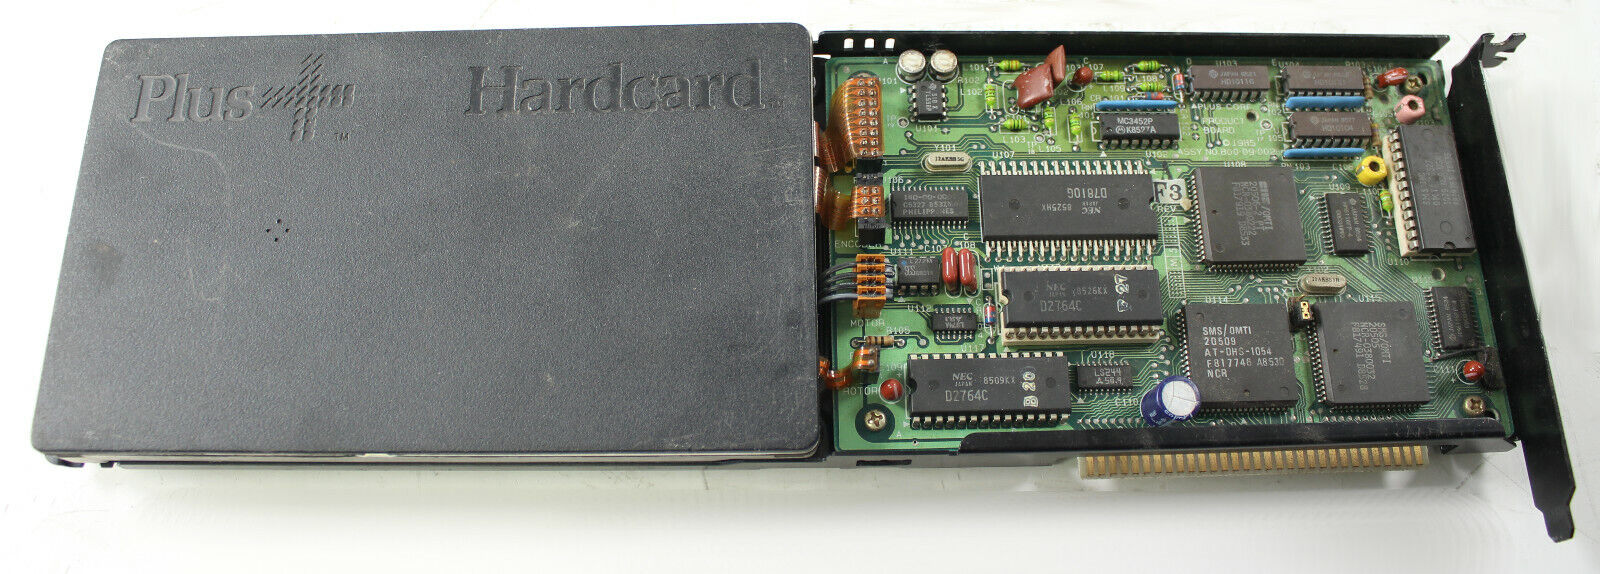 PLUS HardCard 800-09-0028 For IBM PC